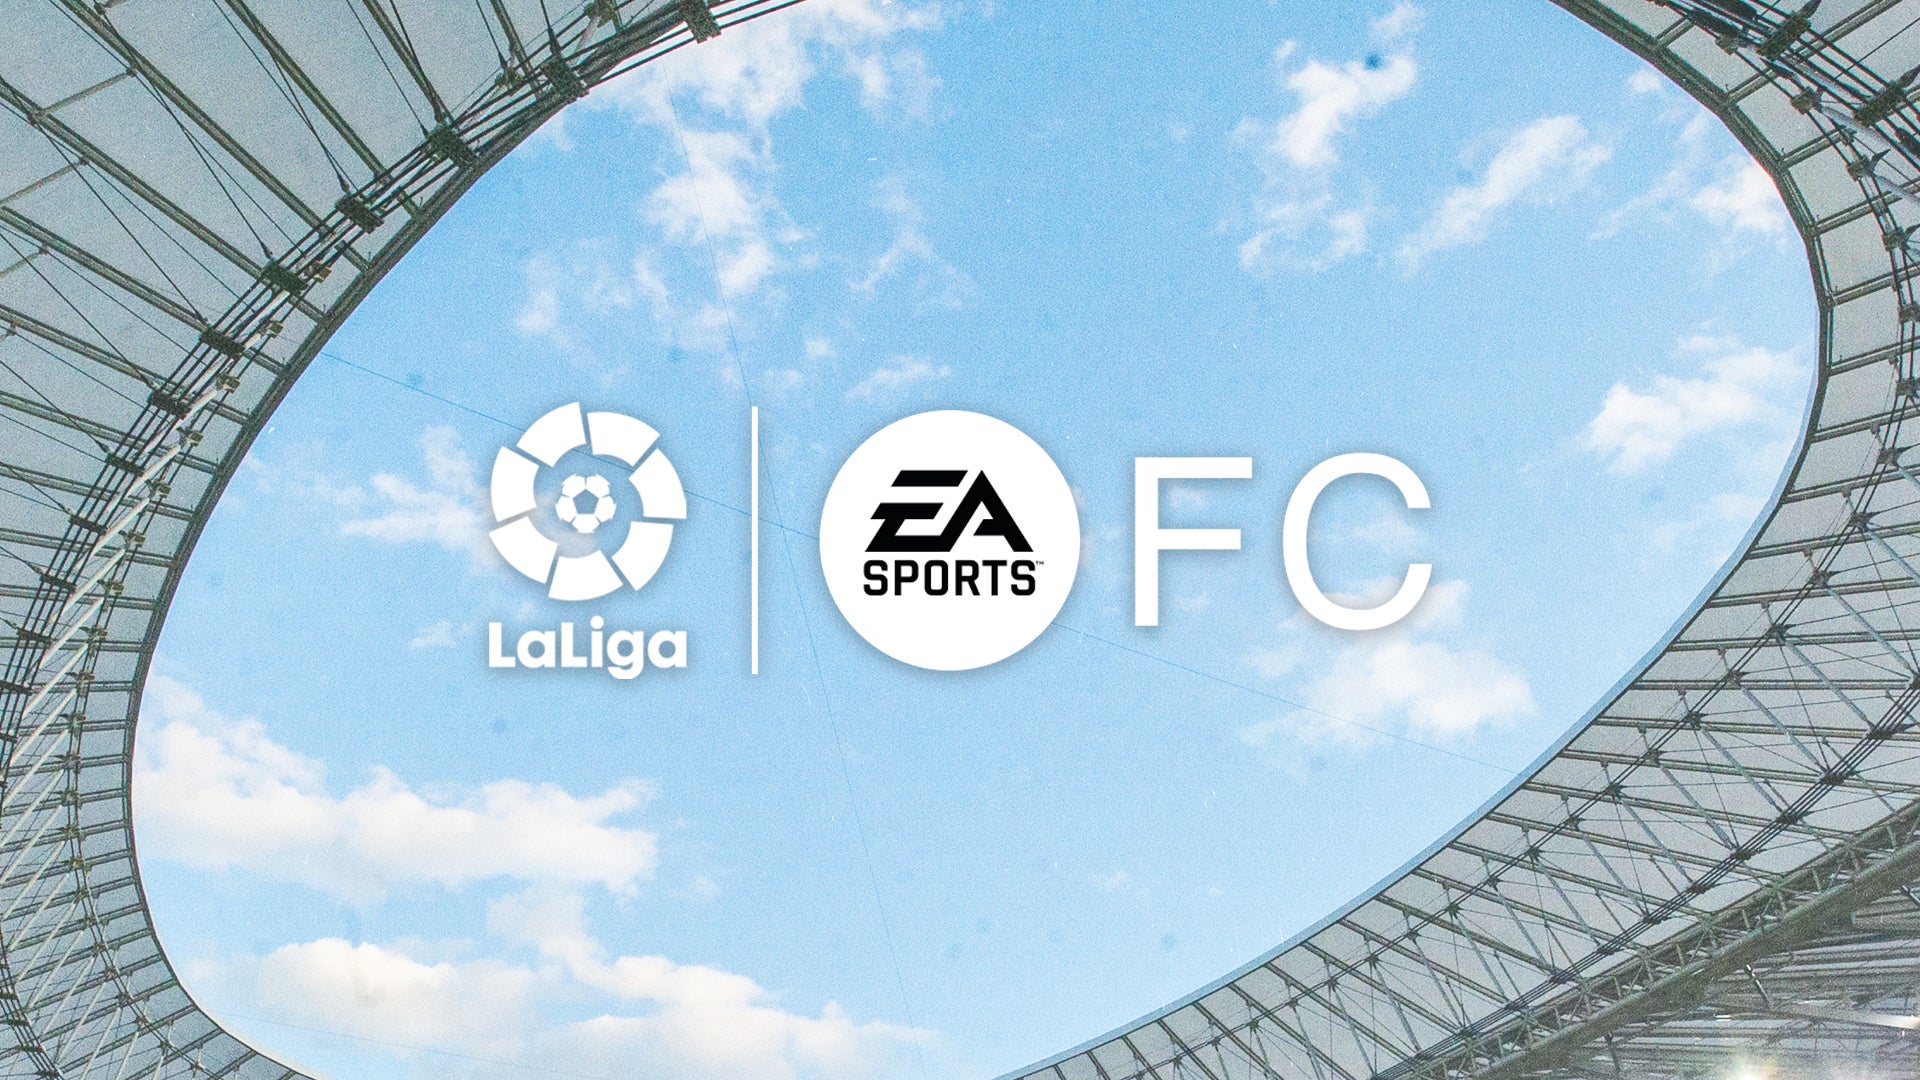 EA Sports and LaLiga partnership logo.